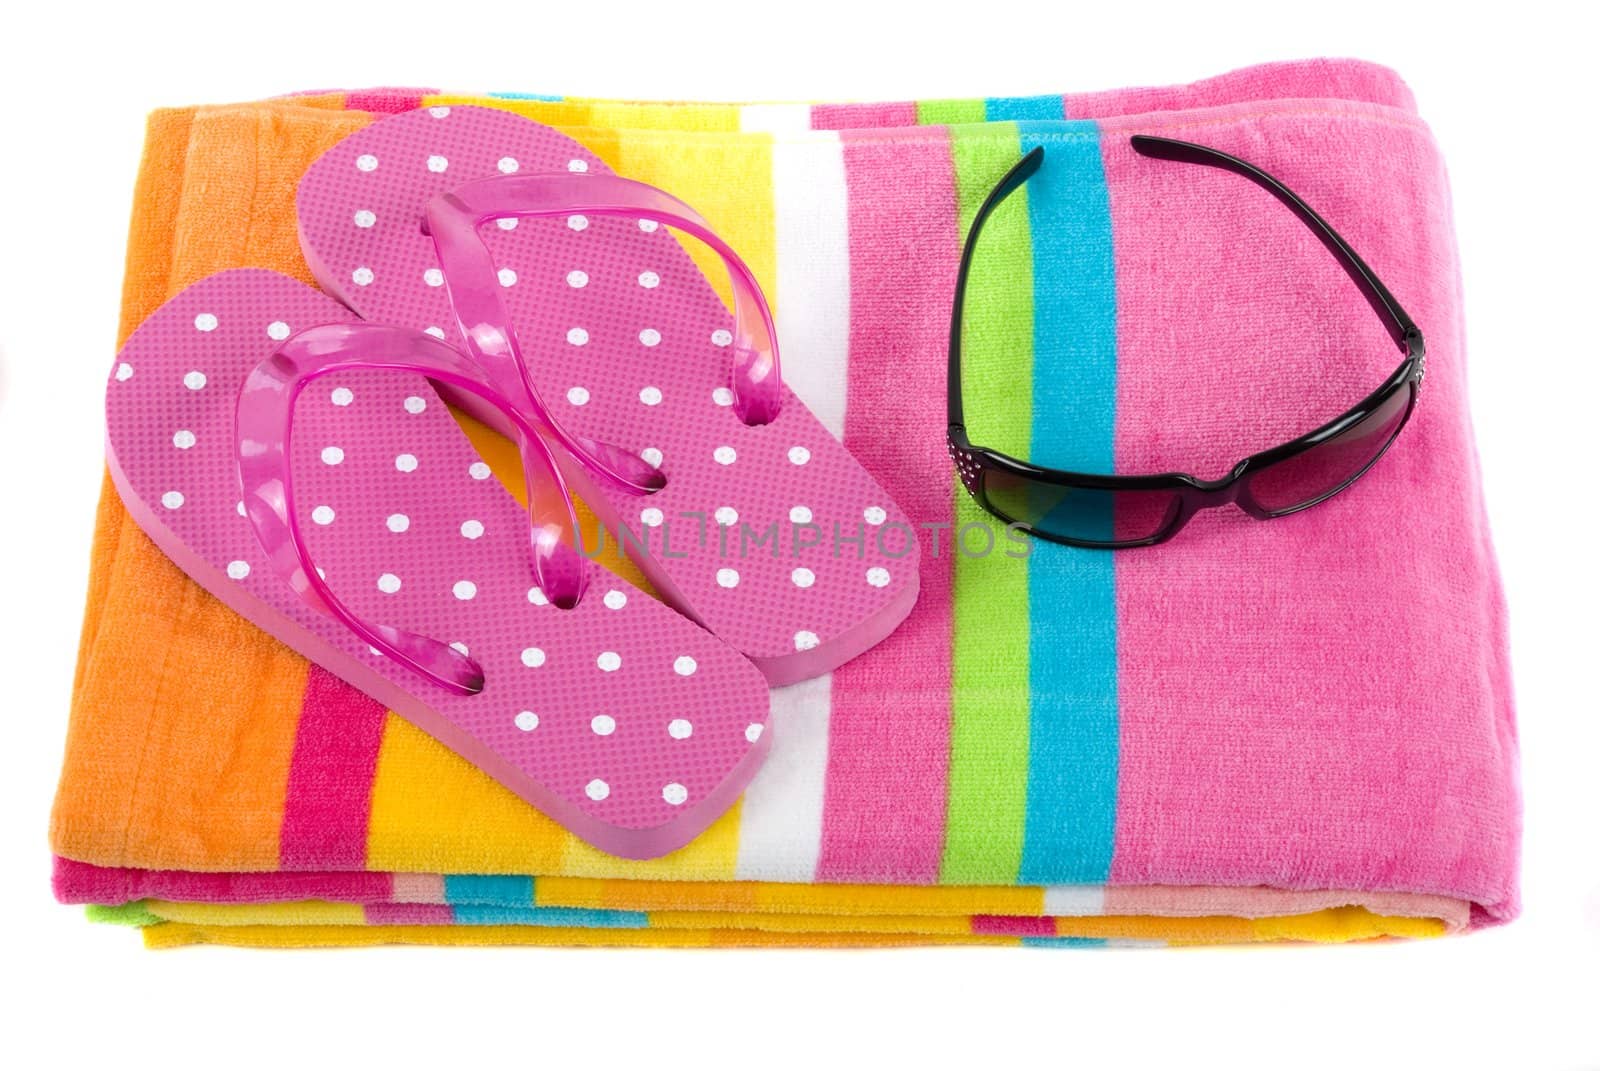 Colorful summer beachwear (flip flops), towel, and sunglasses